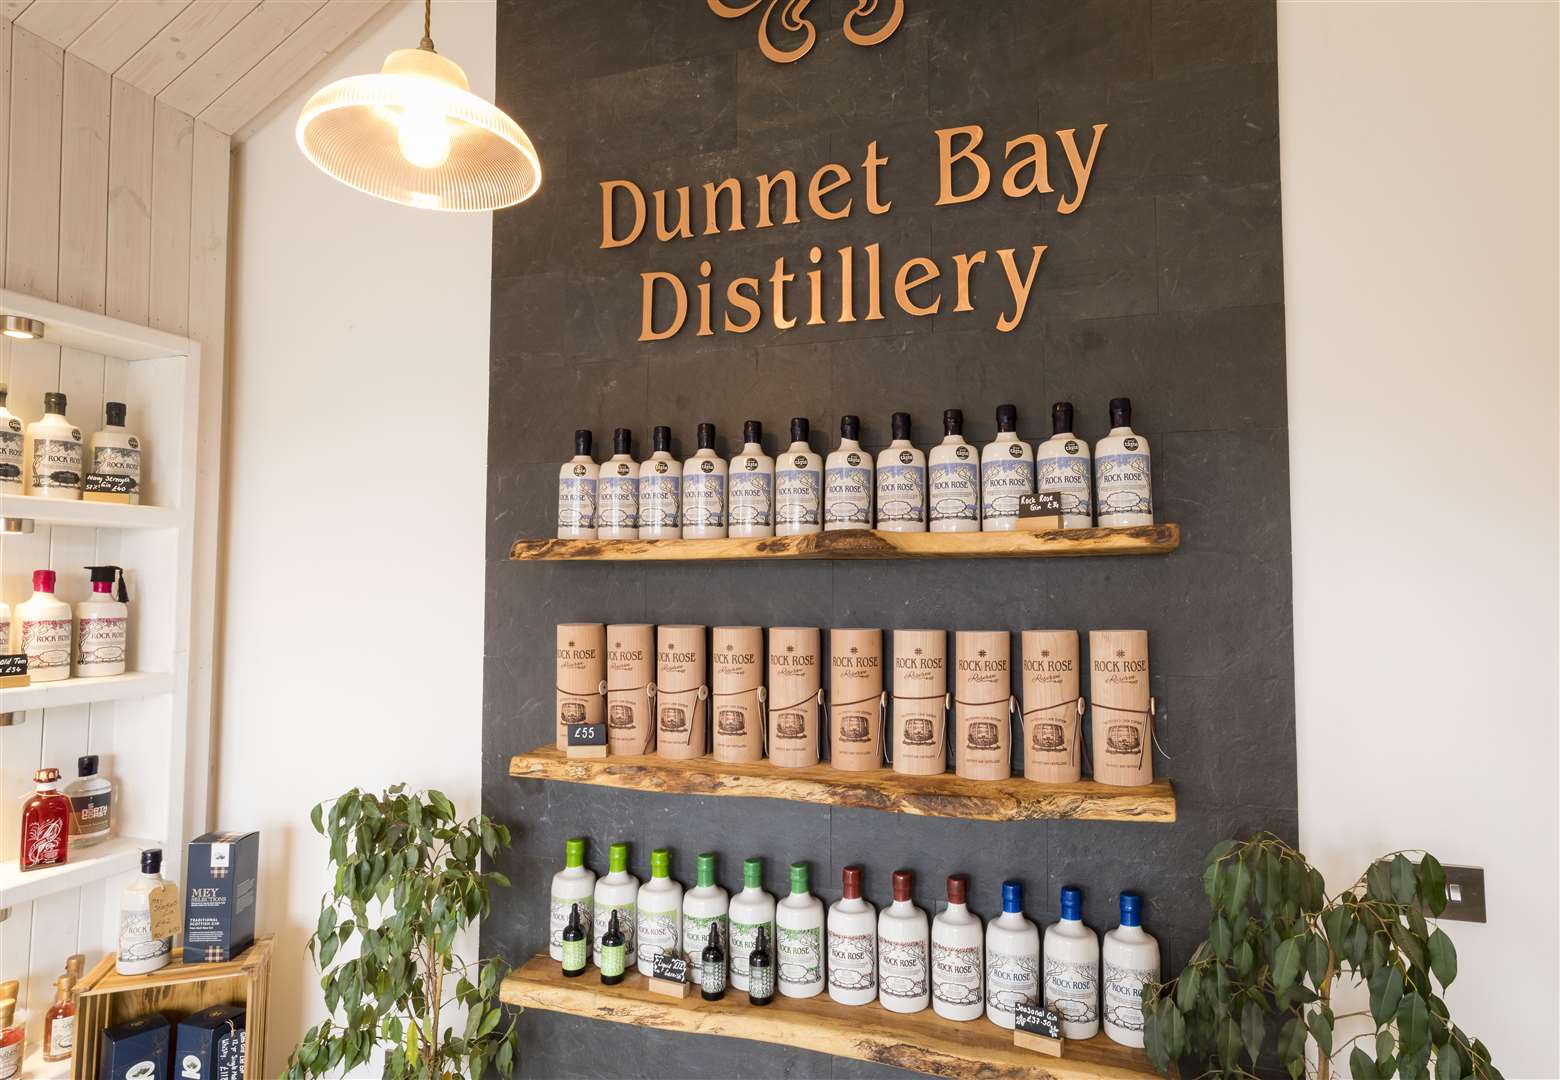 Ceramic bottles make up part of Dunnet Bay Distillers brand identity.